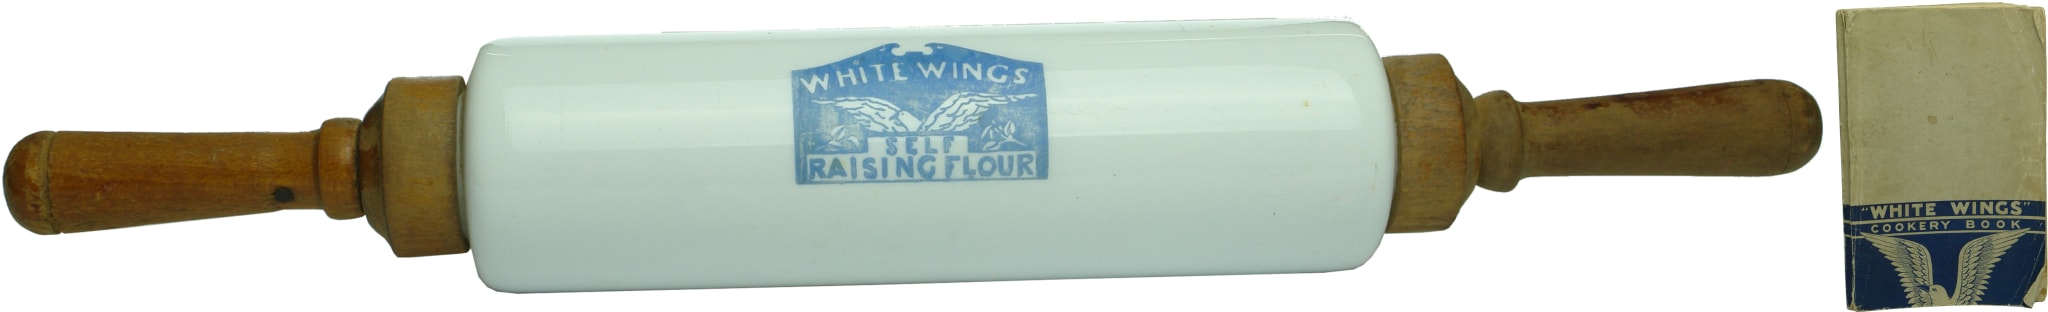 Milk Glass White Wings Advertising Rolling Pin